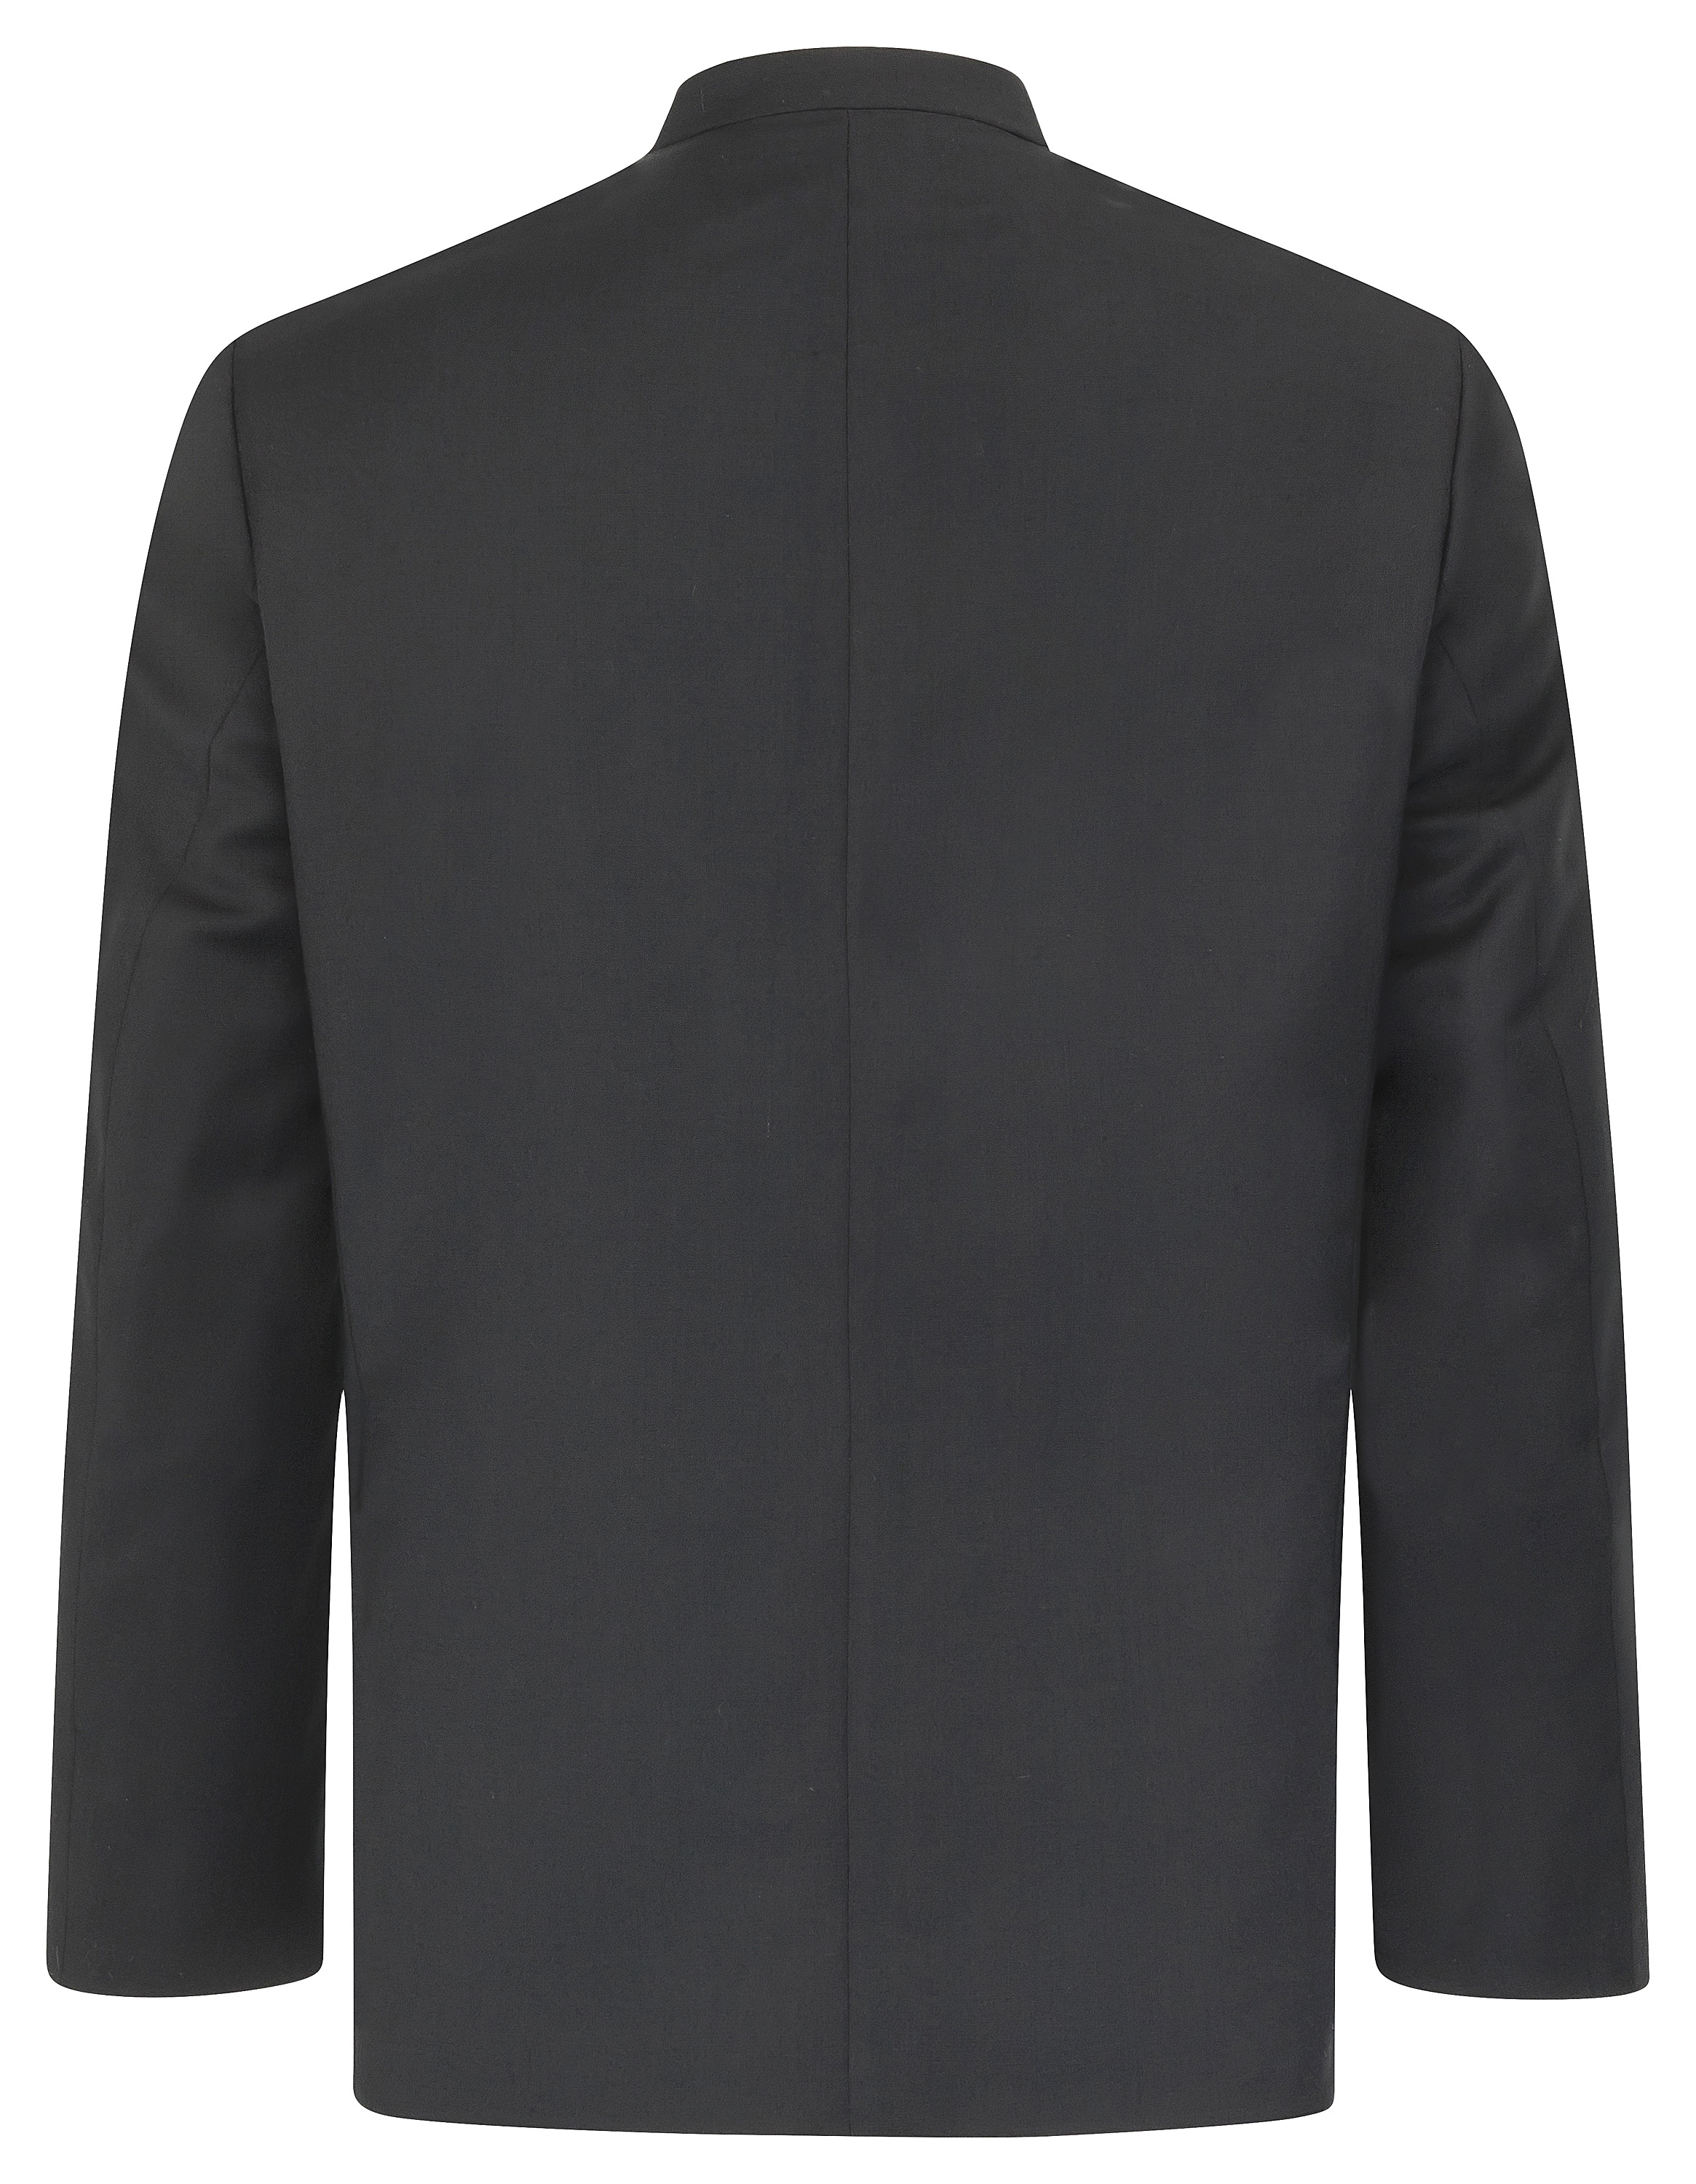 man stand up collar jacket black *paid stock VK 139,00 €* | Restaurant ...